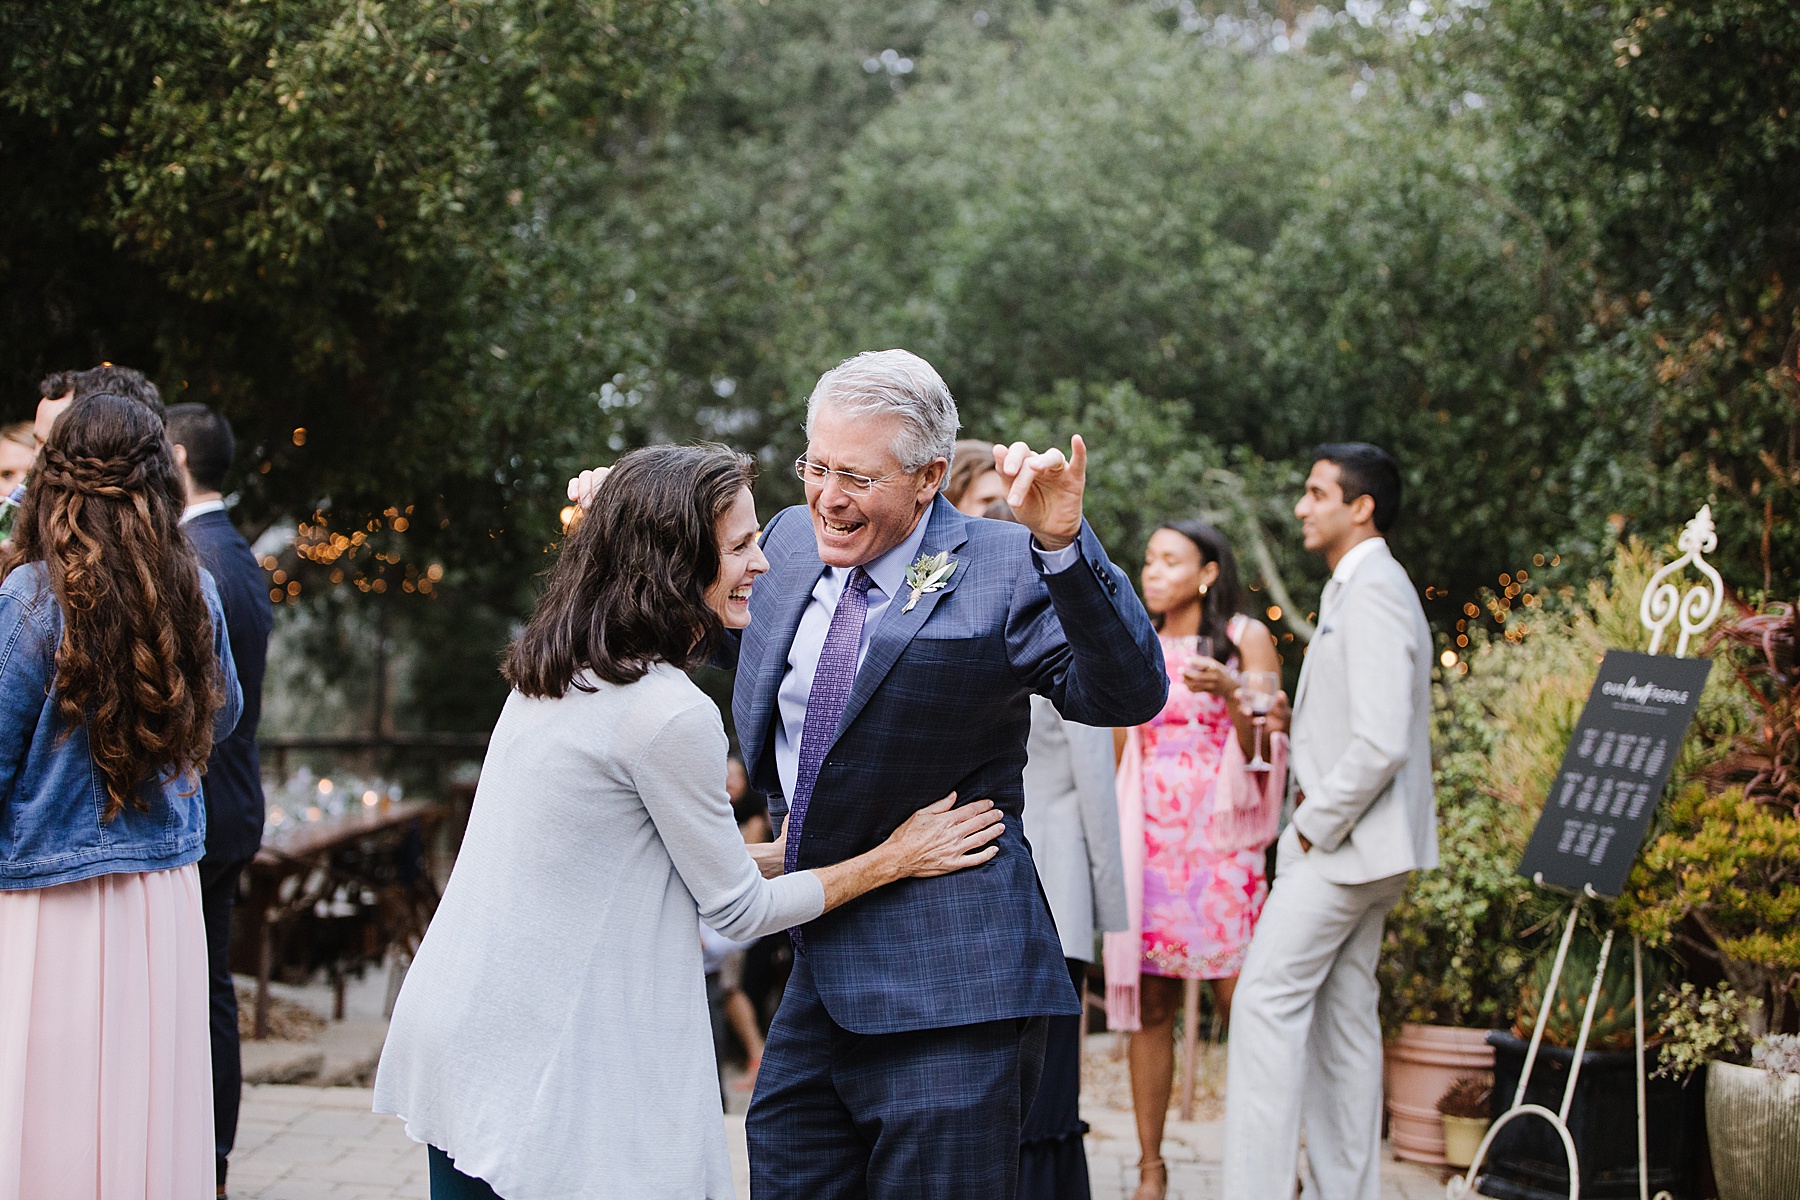 Tiber Canyon Ranch Summer Wedding for the Kleins